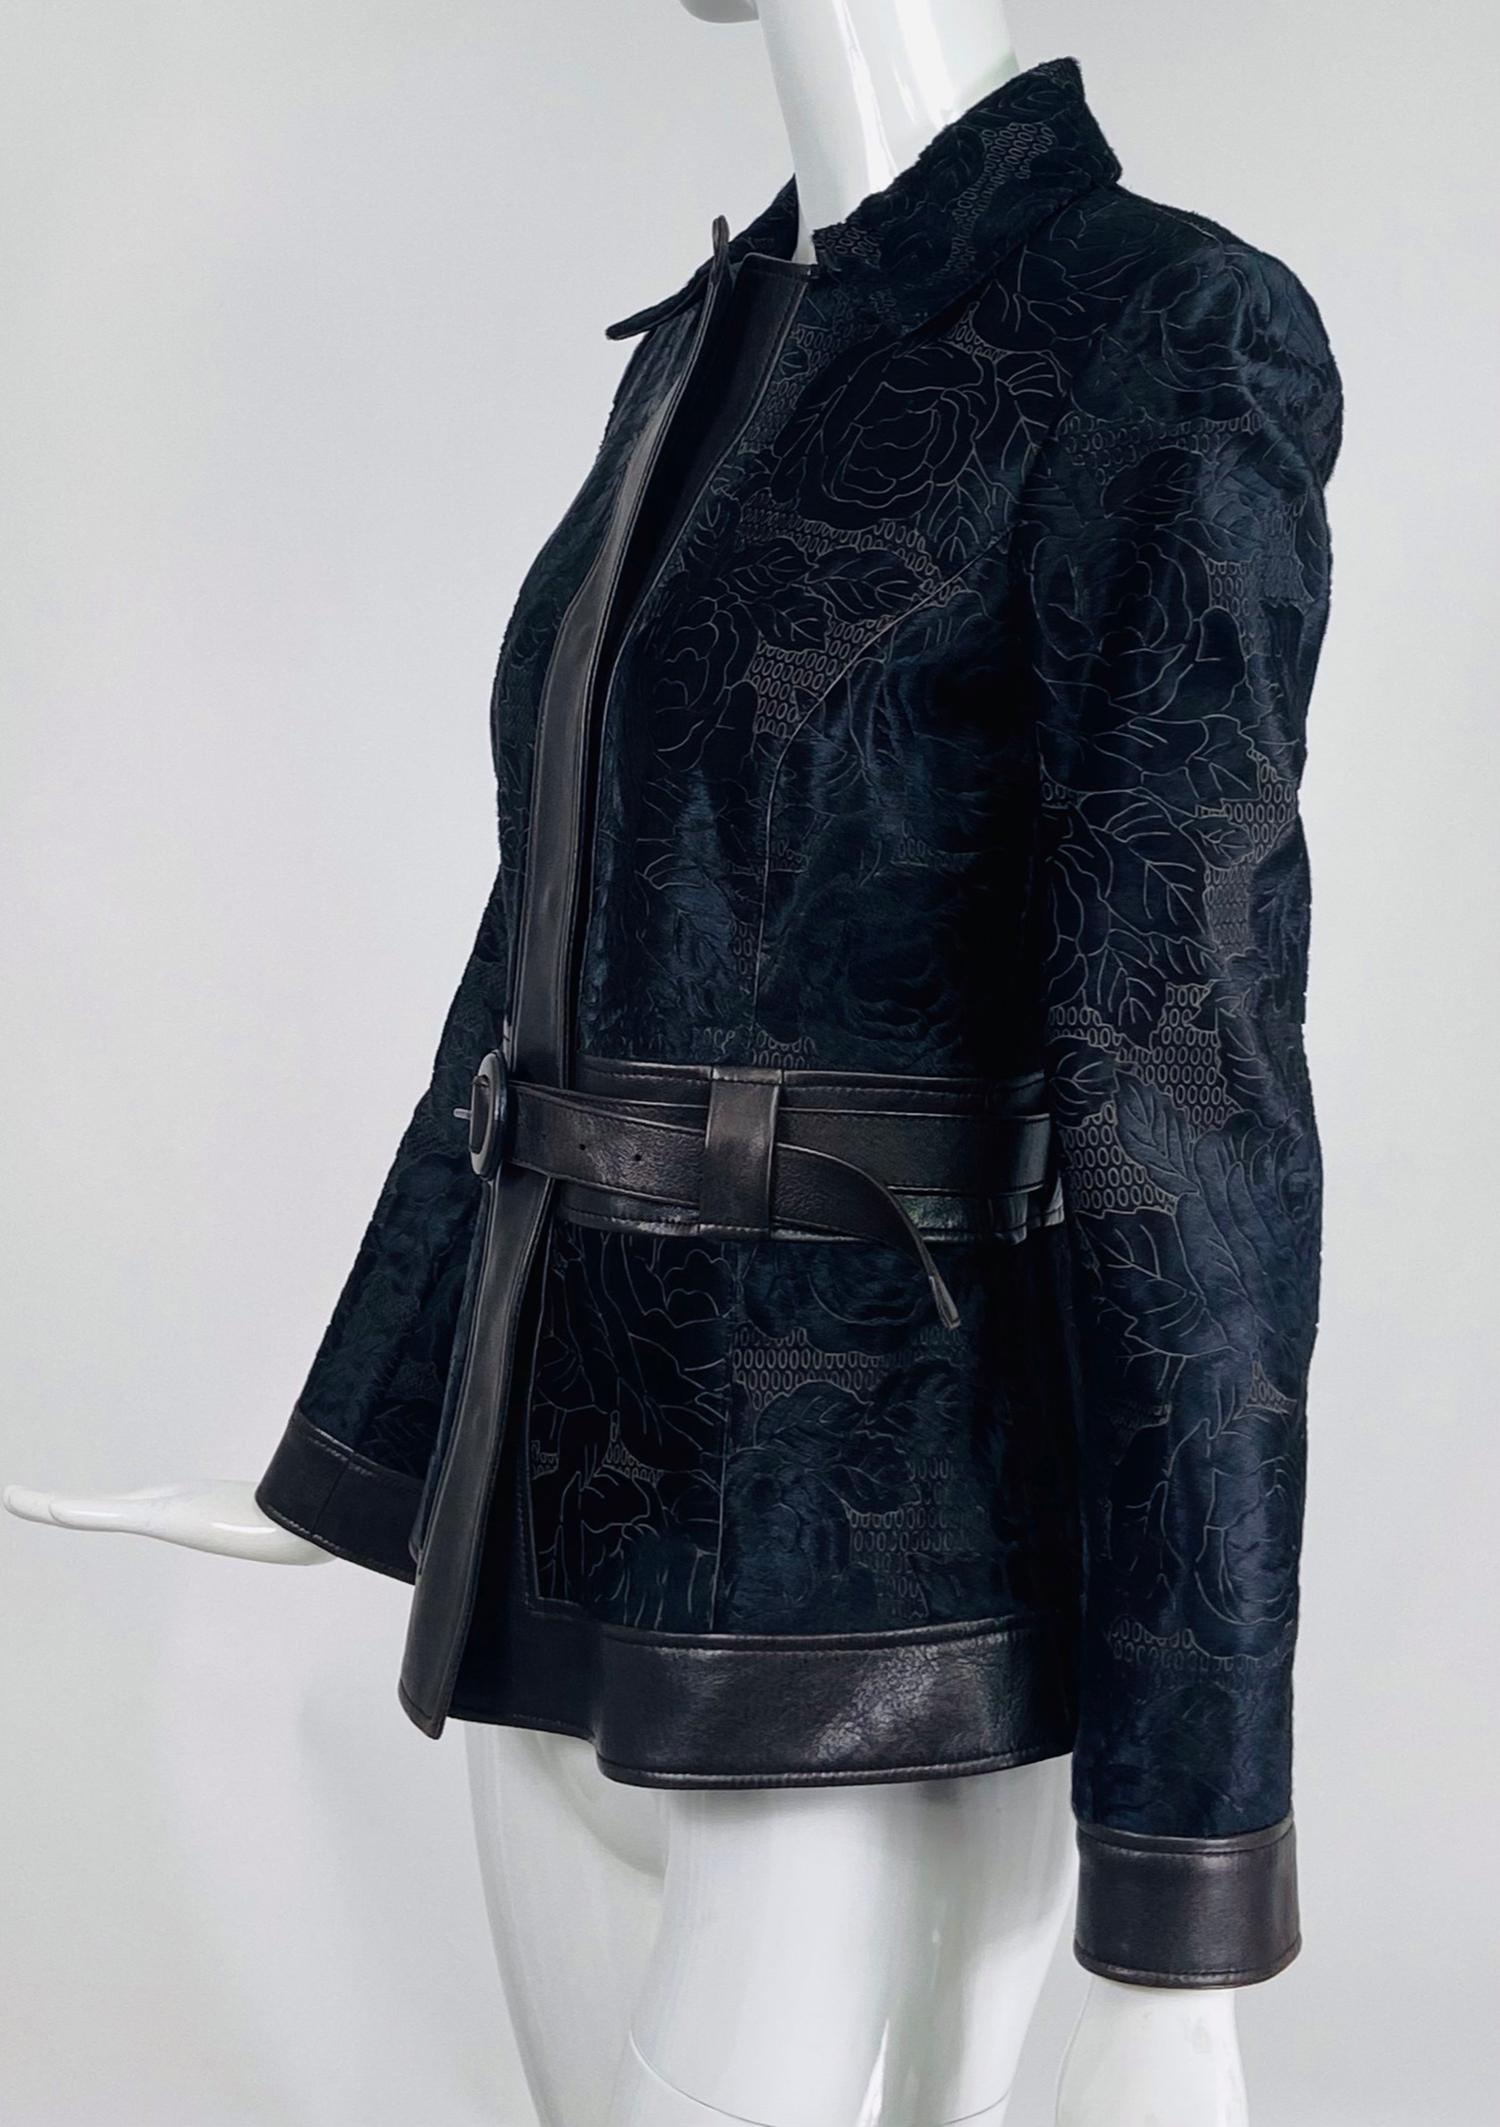 Women's Giorgio Armani Sheared Lamb with Leather Facings in Black & Brown Jacket